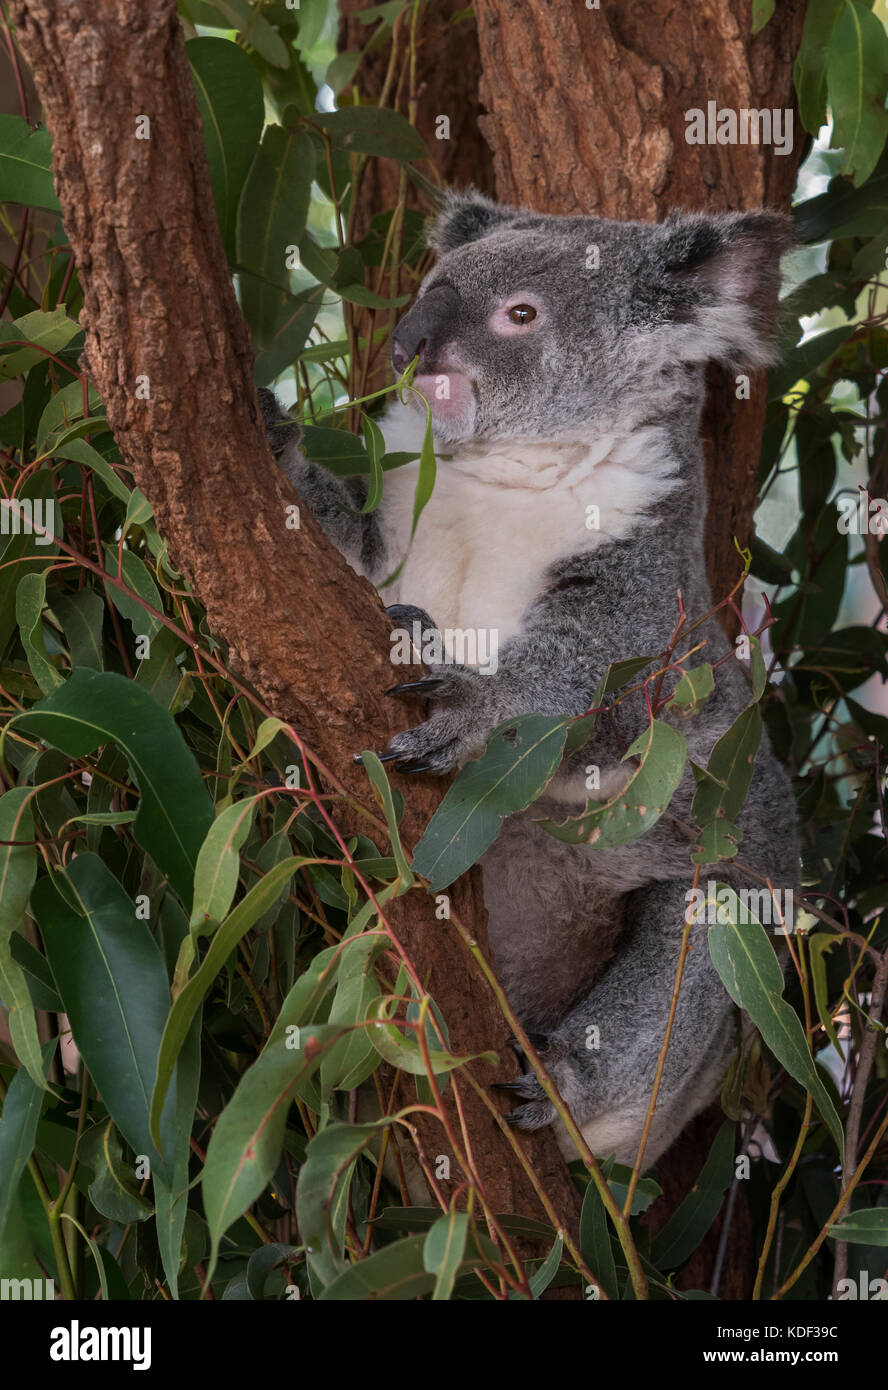 Koalo bear one of Australia's favourite animals. Stock Photo